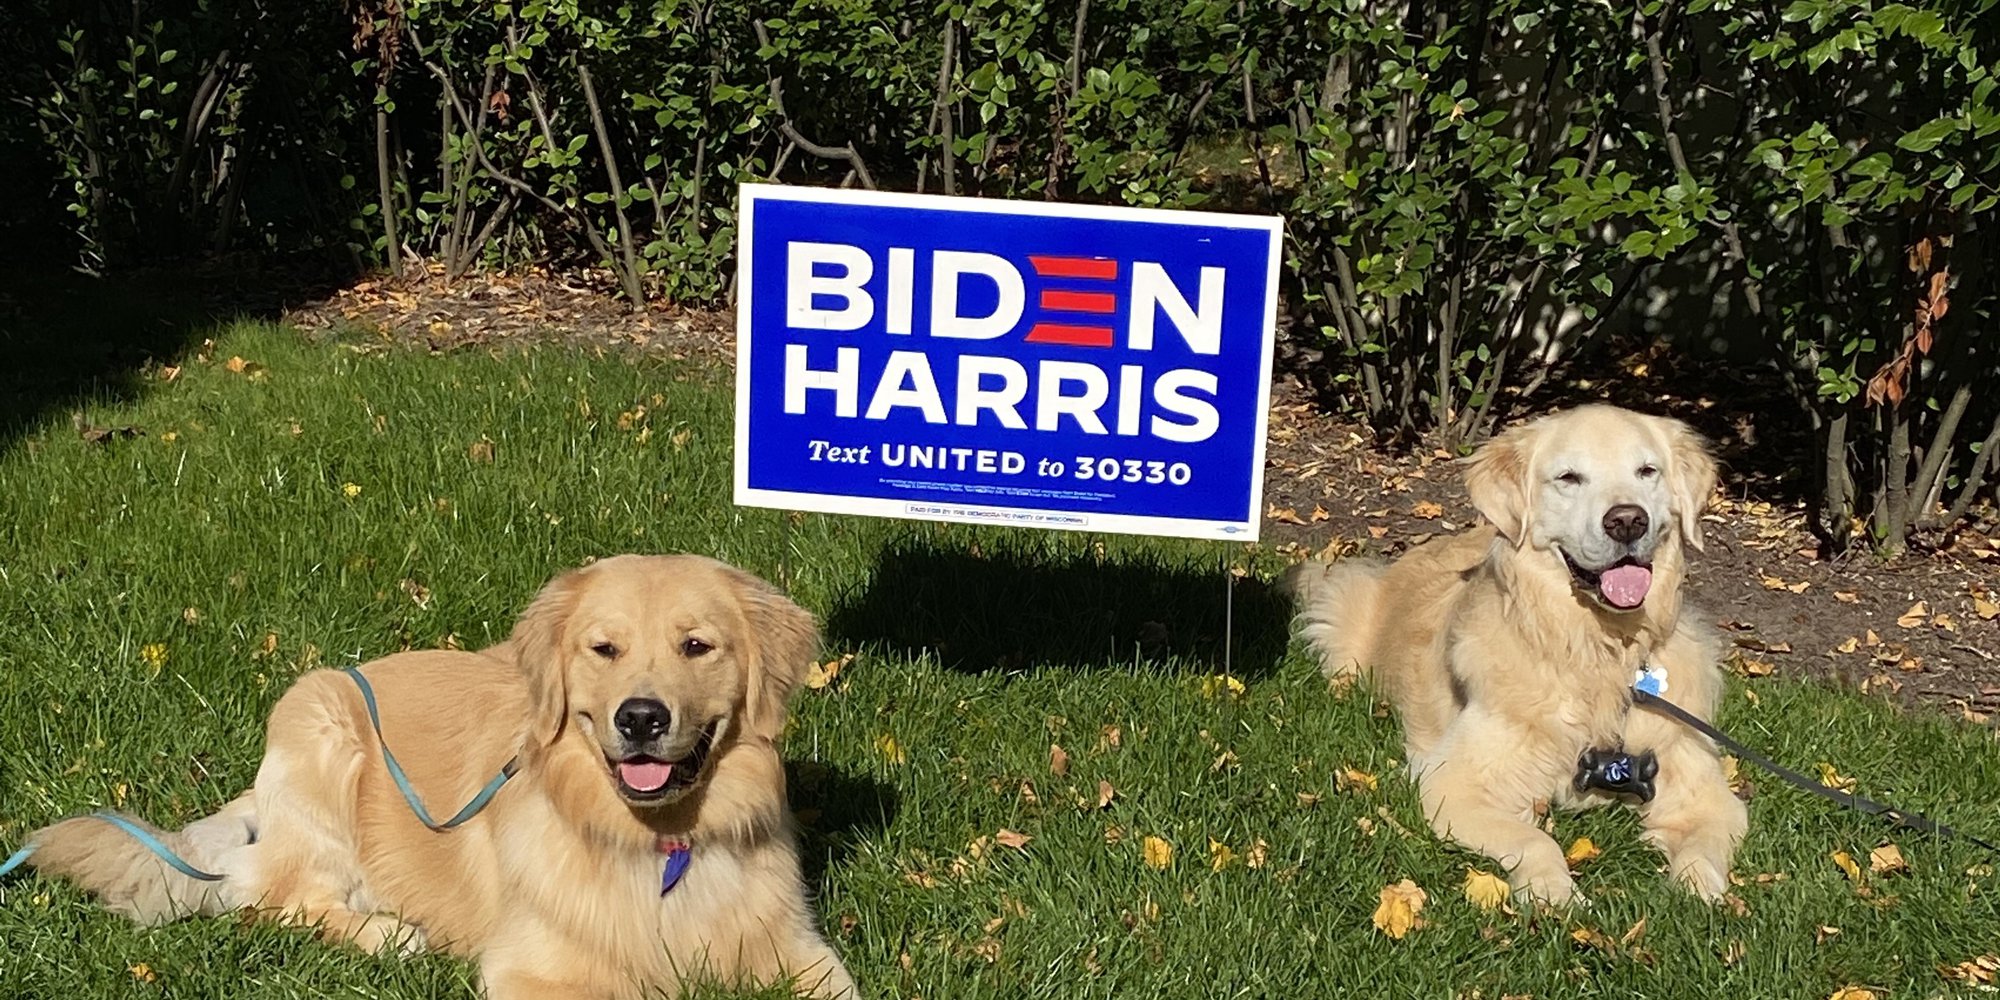 Biden Harris yard sign with dogs